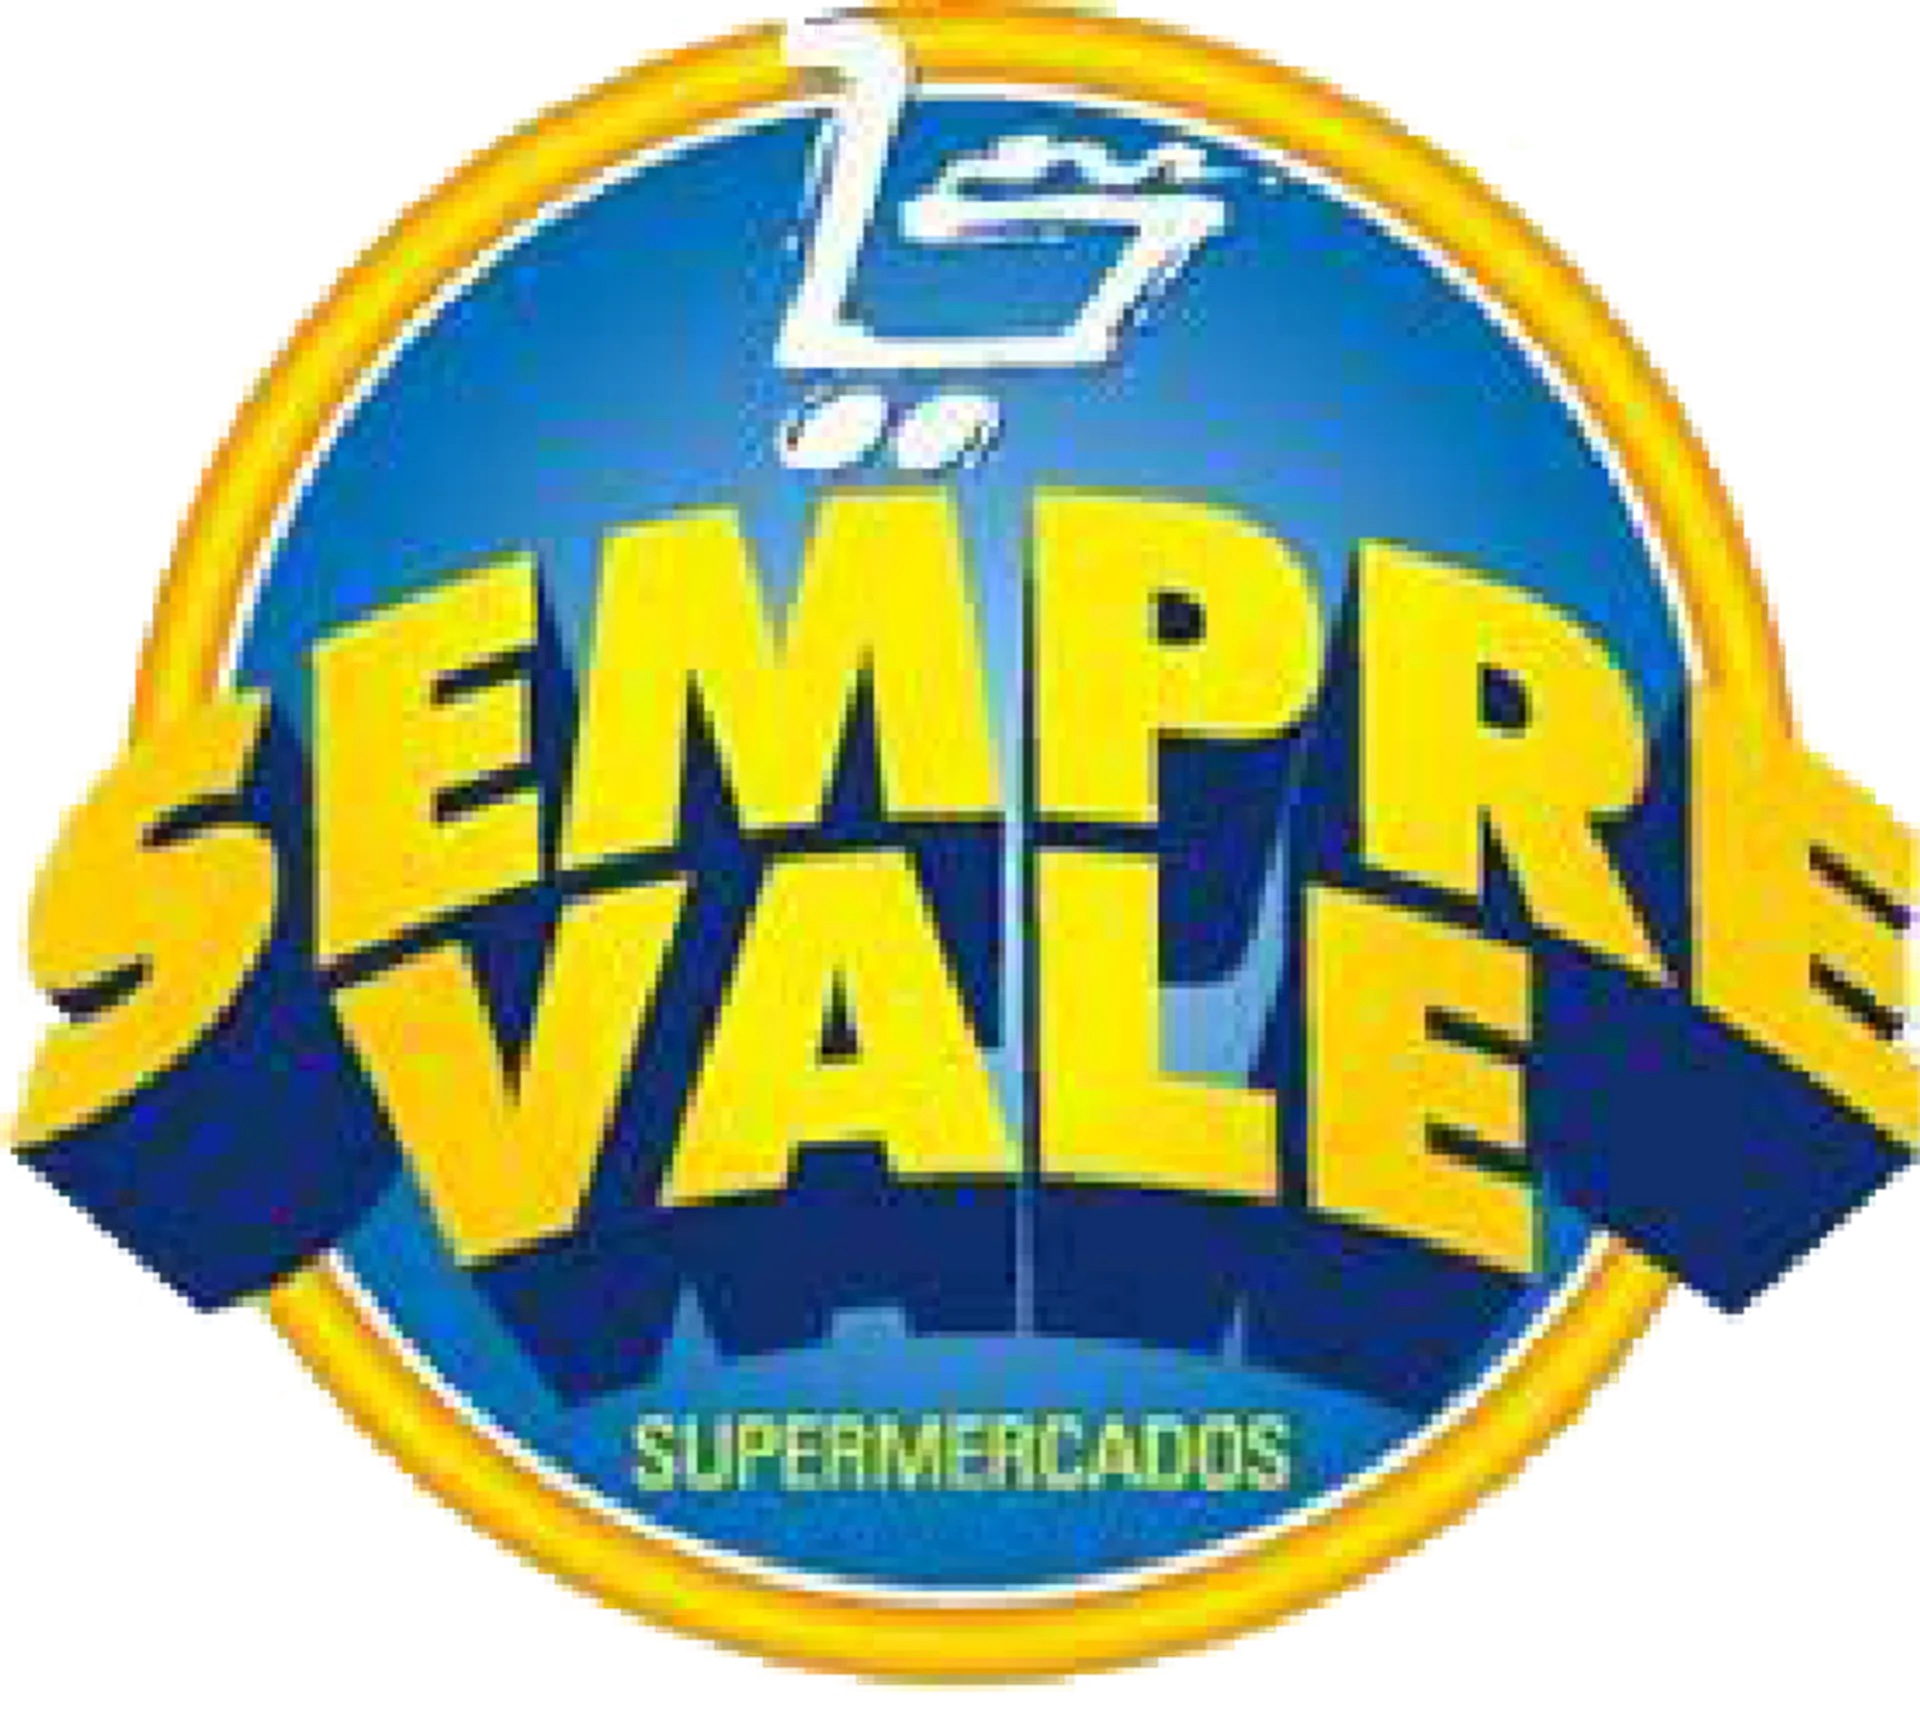 SEMPRE VALE SUPERMERCADOS logo